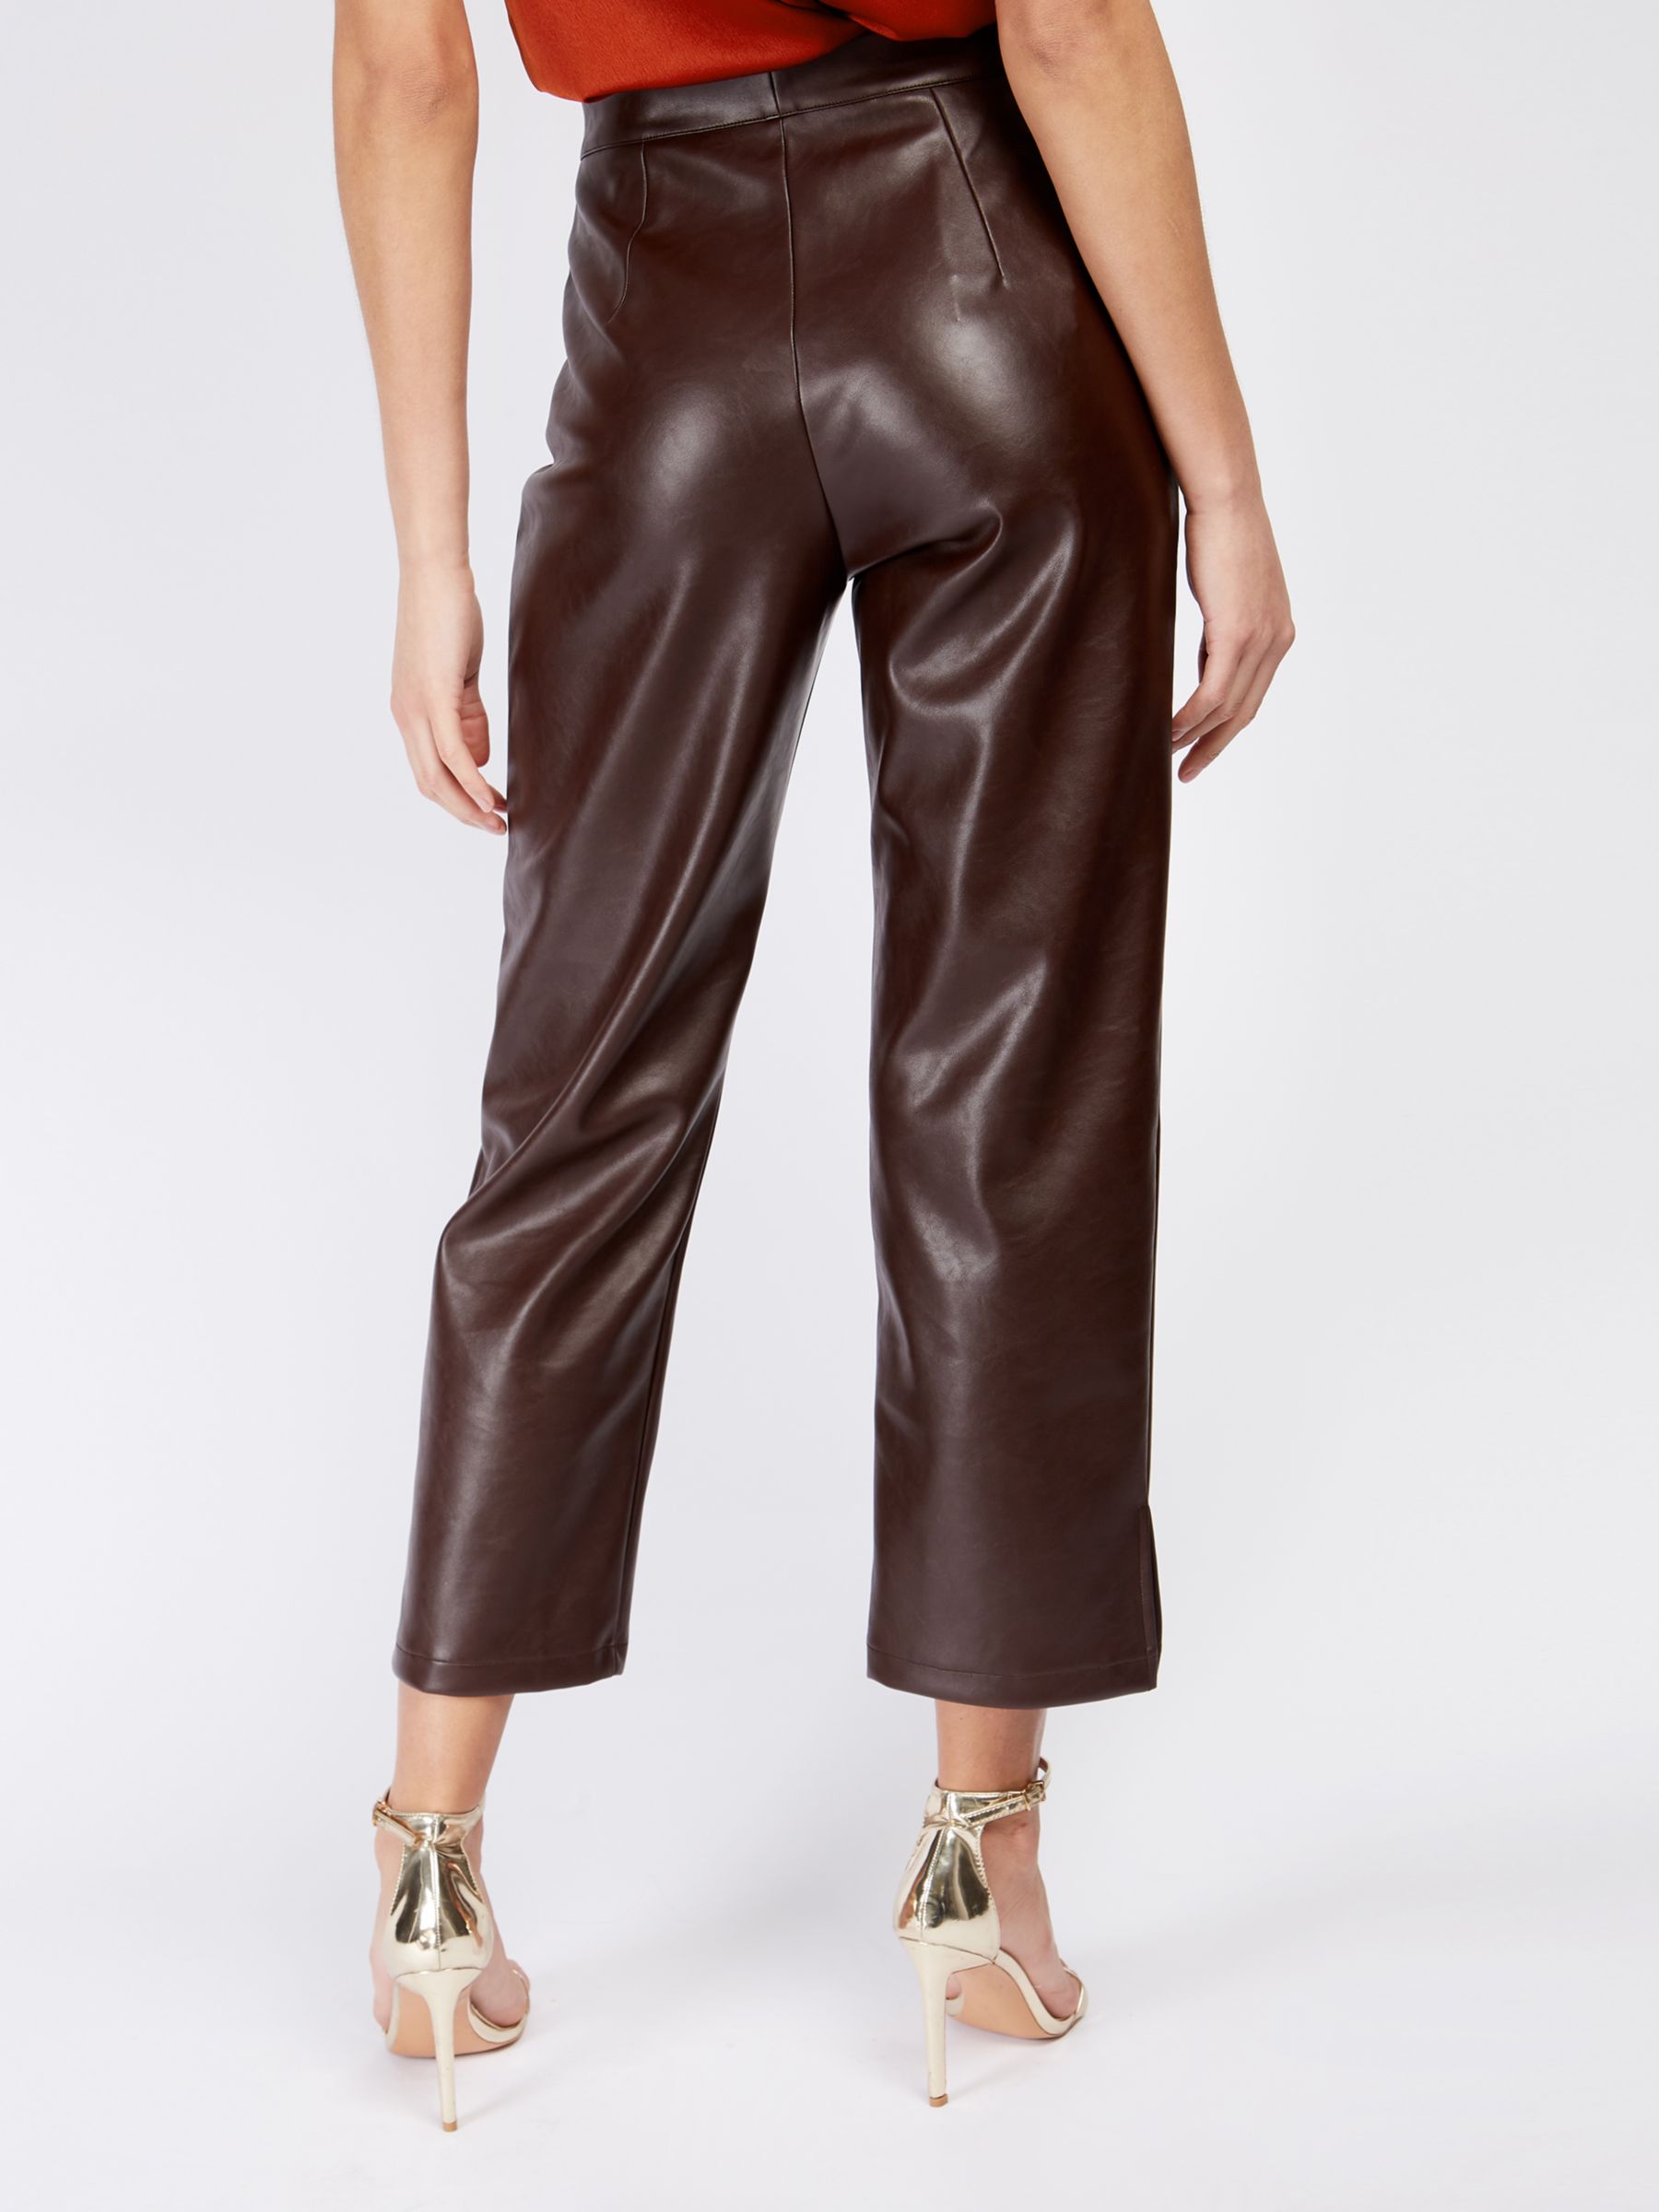 Thermal Leather-Look Leggings - Calzedonia